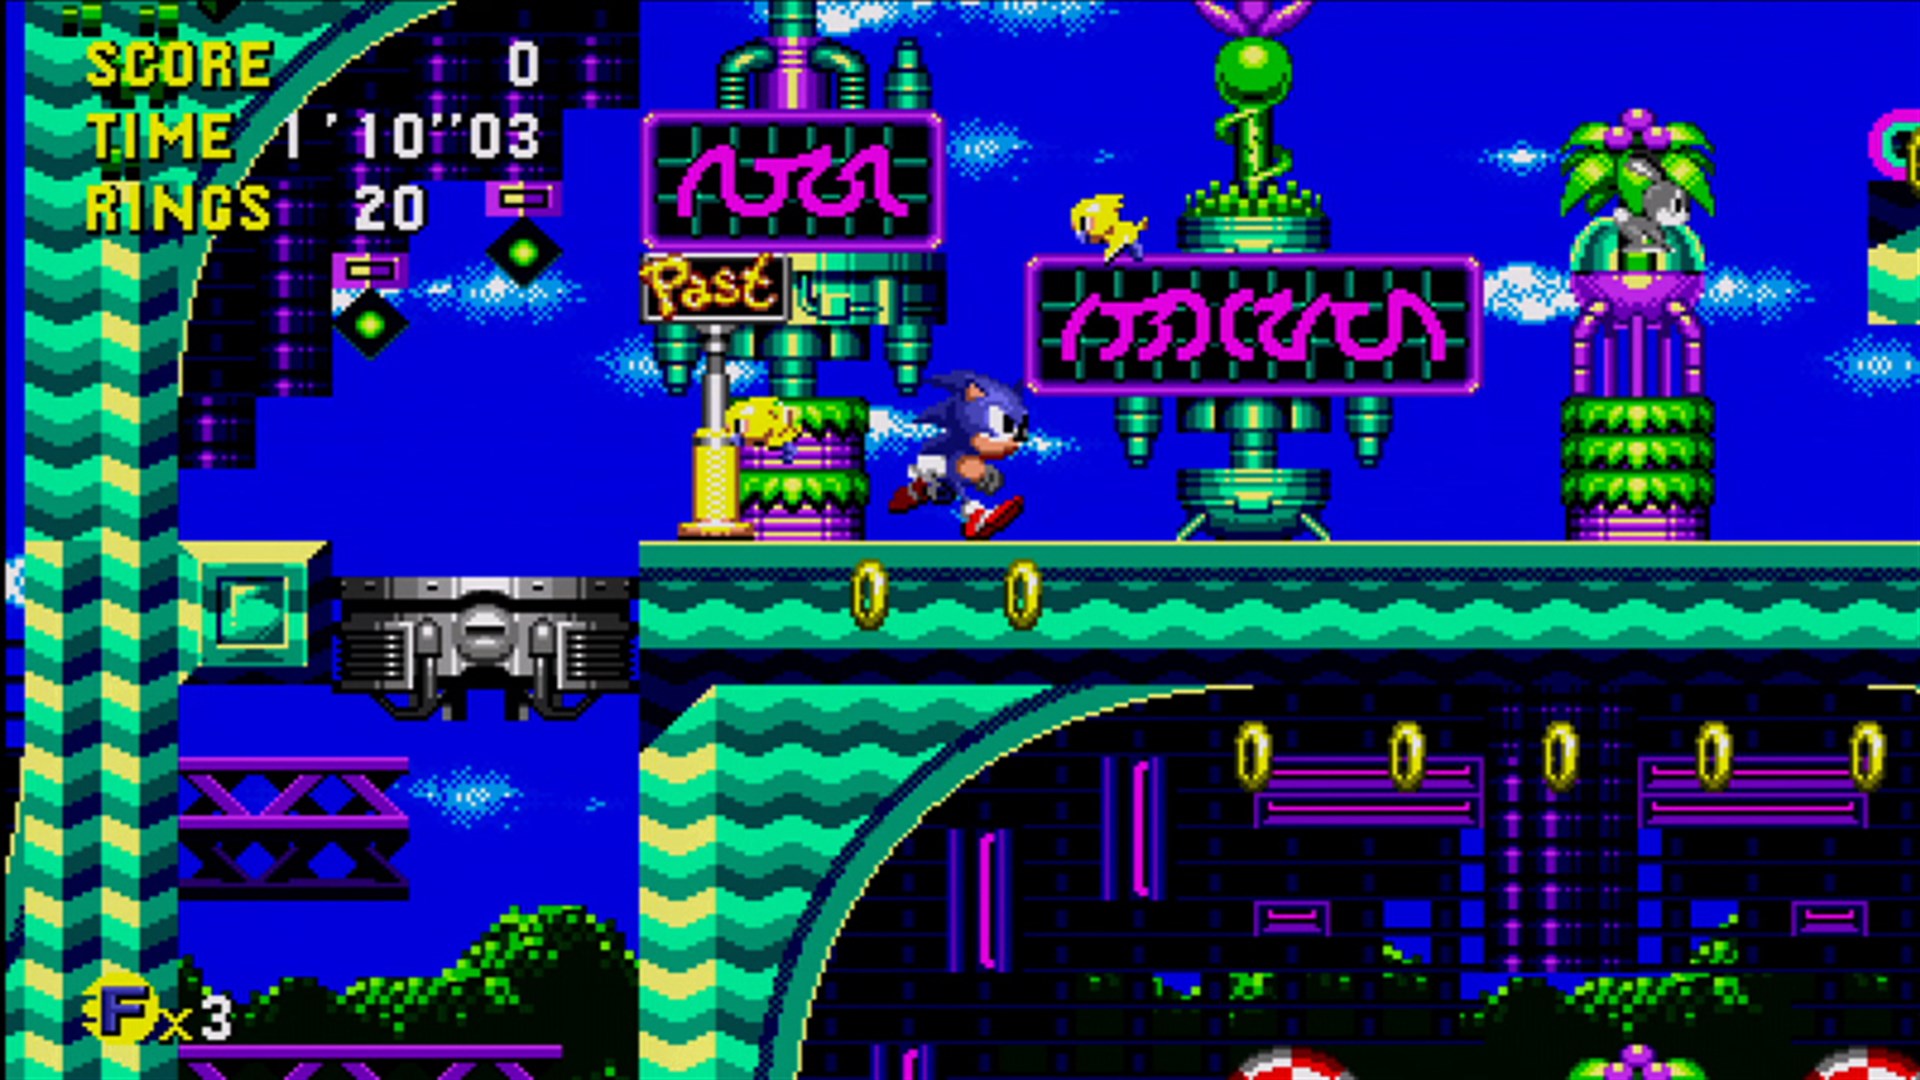 Sega is delisting the original Sonic games